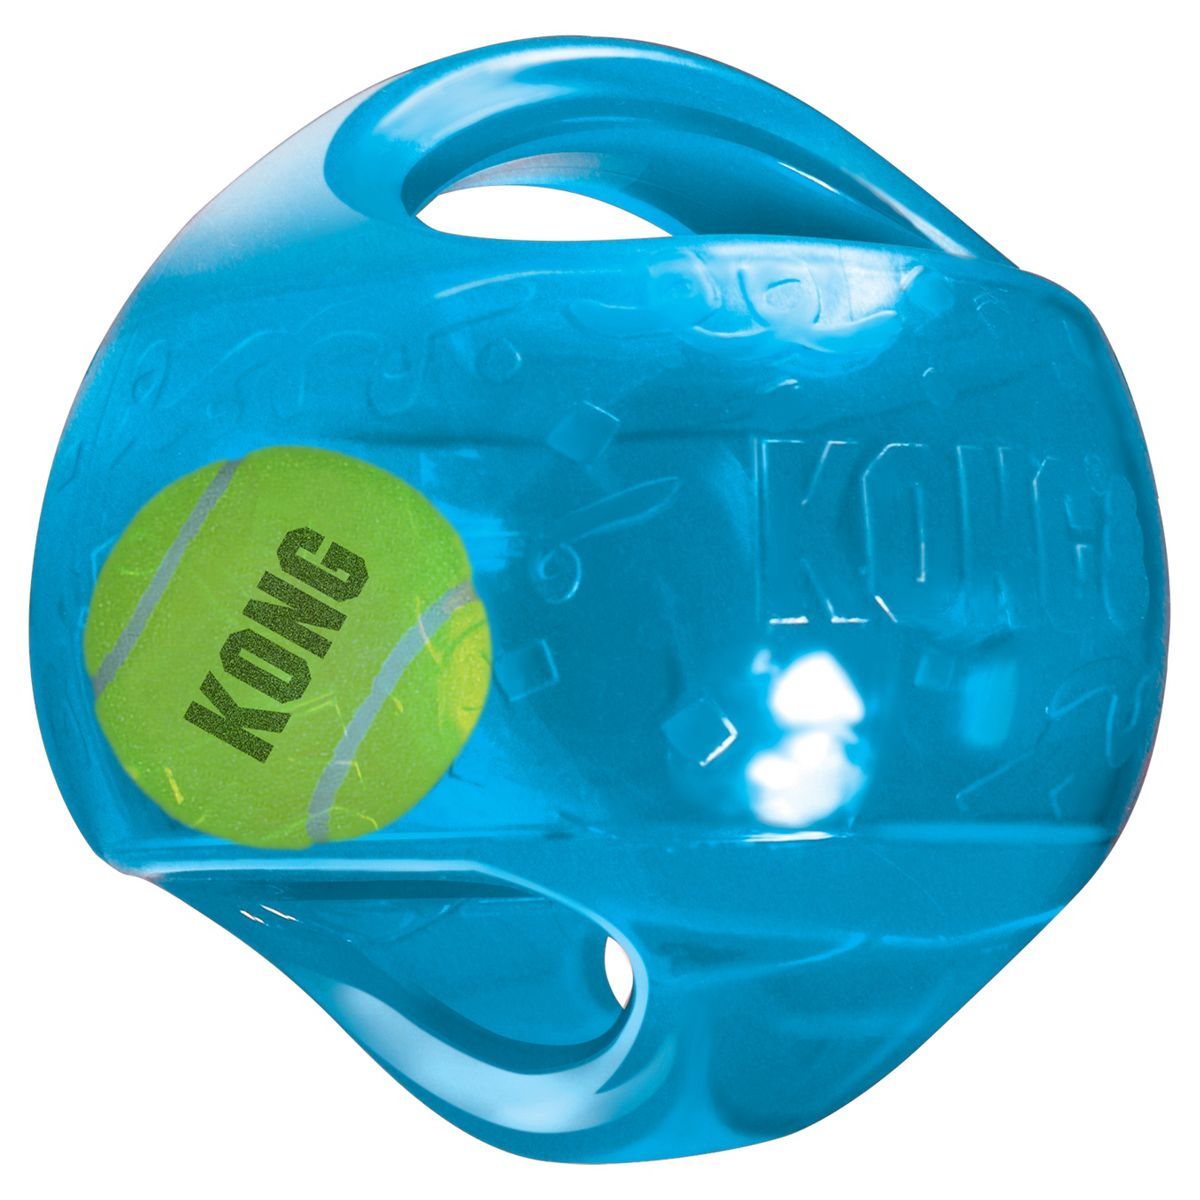 KONG 2-in-1 Jumbler Interactive Dog Toy - Blue - M/L | Target